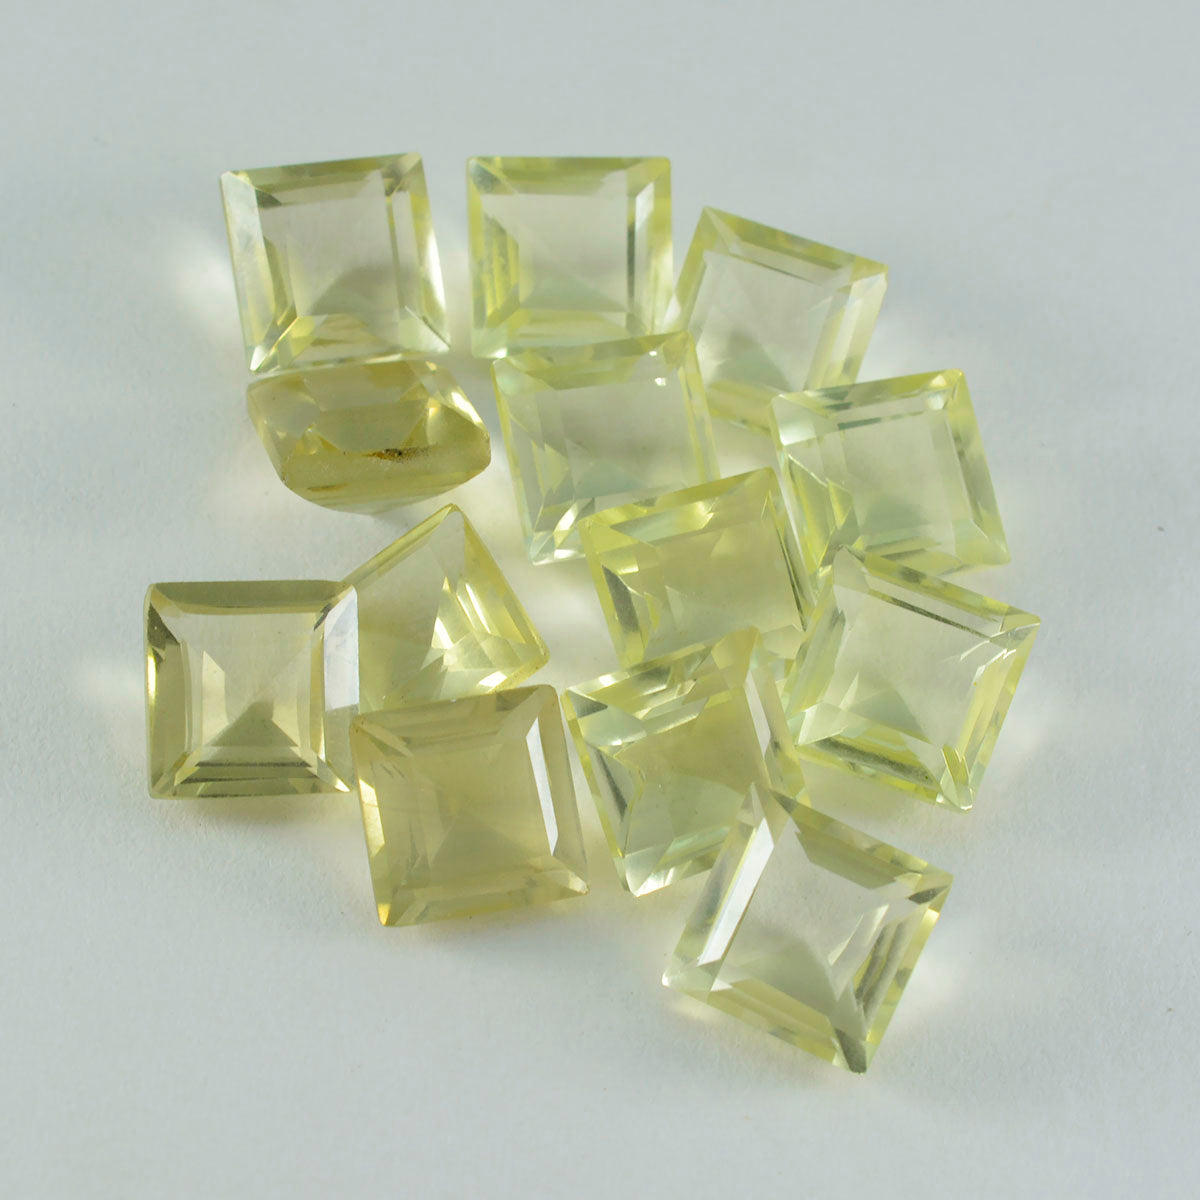 Riyogems 1PC Yellow Lemon Quartz Faceted 7x7 mm Square Shape A1 Quality Gems